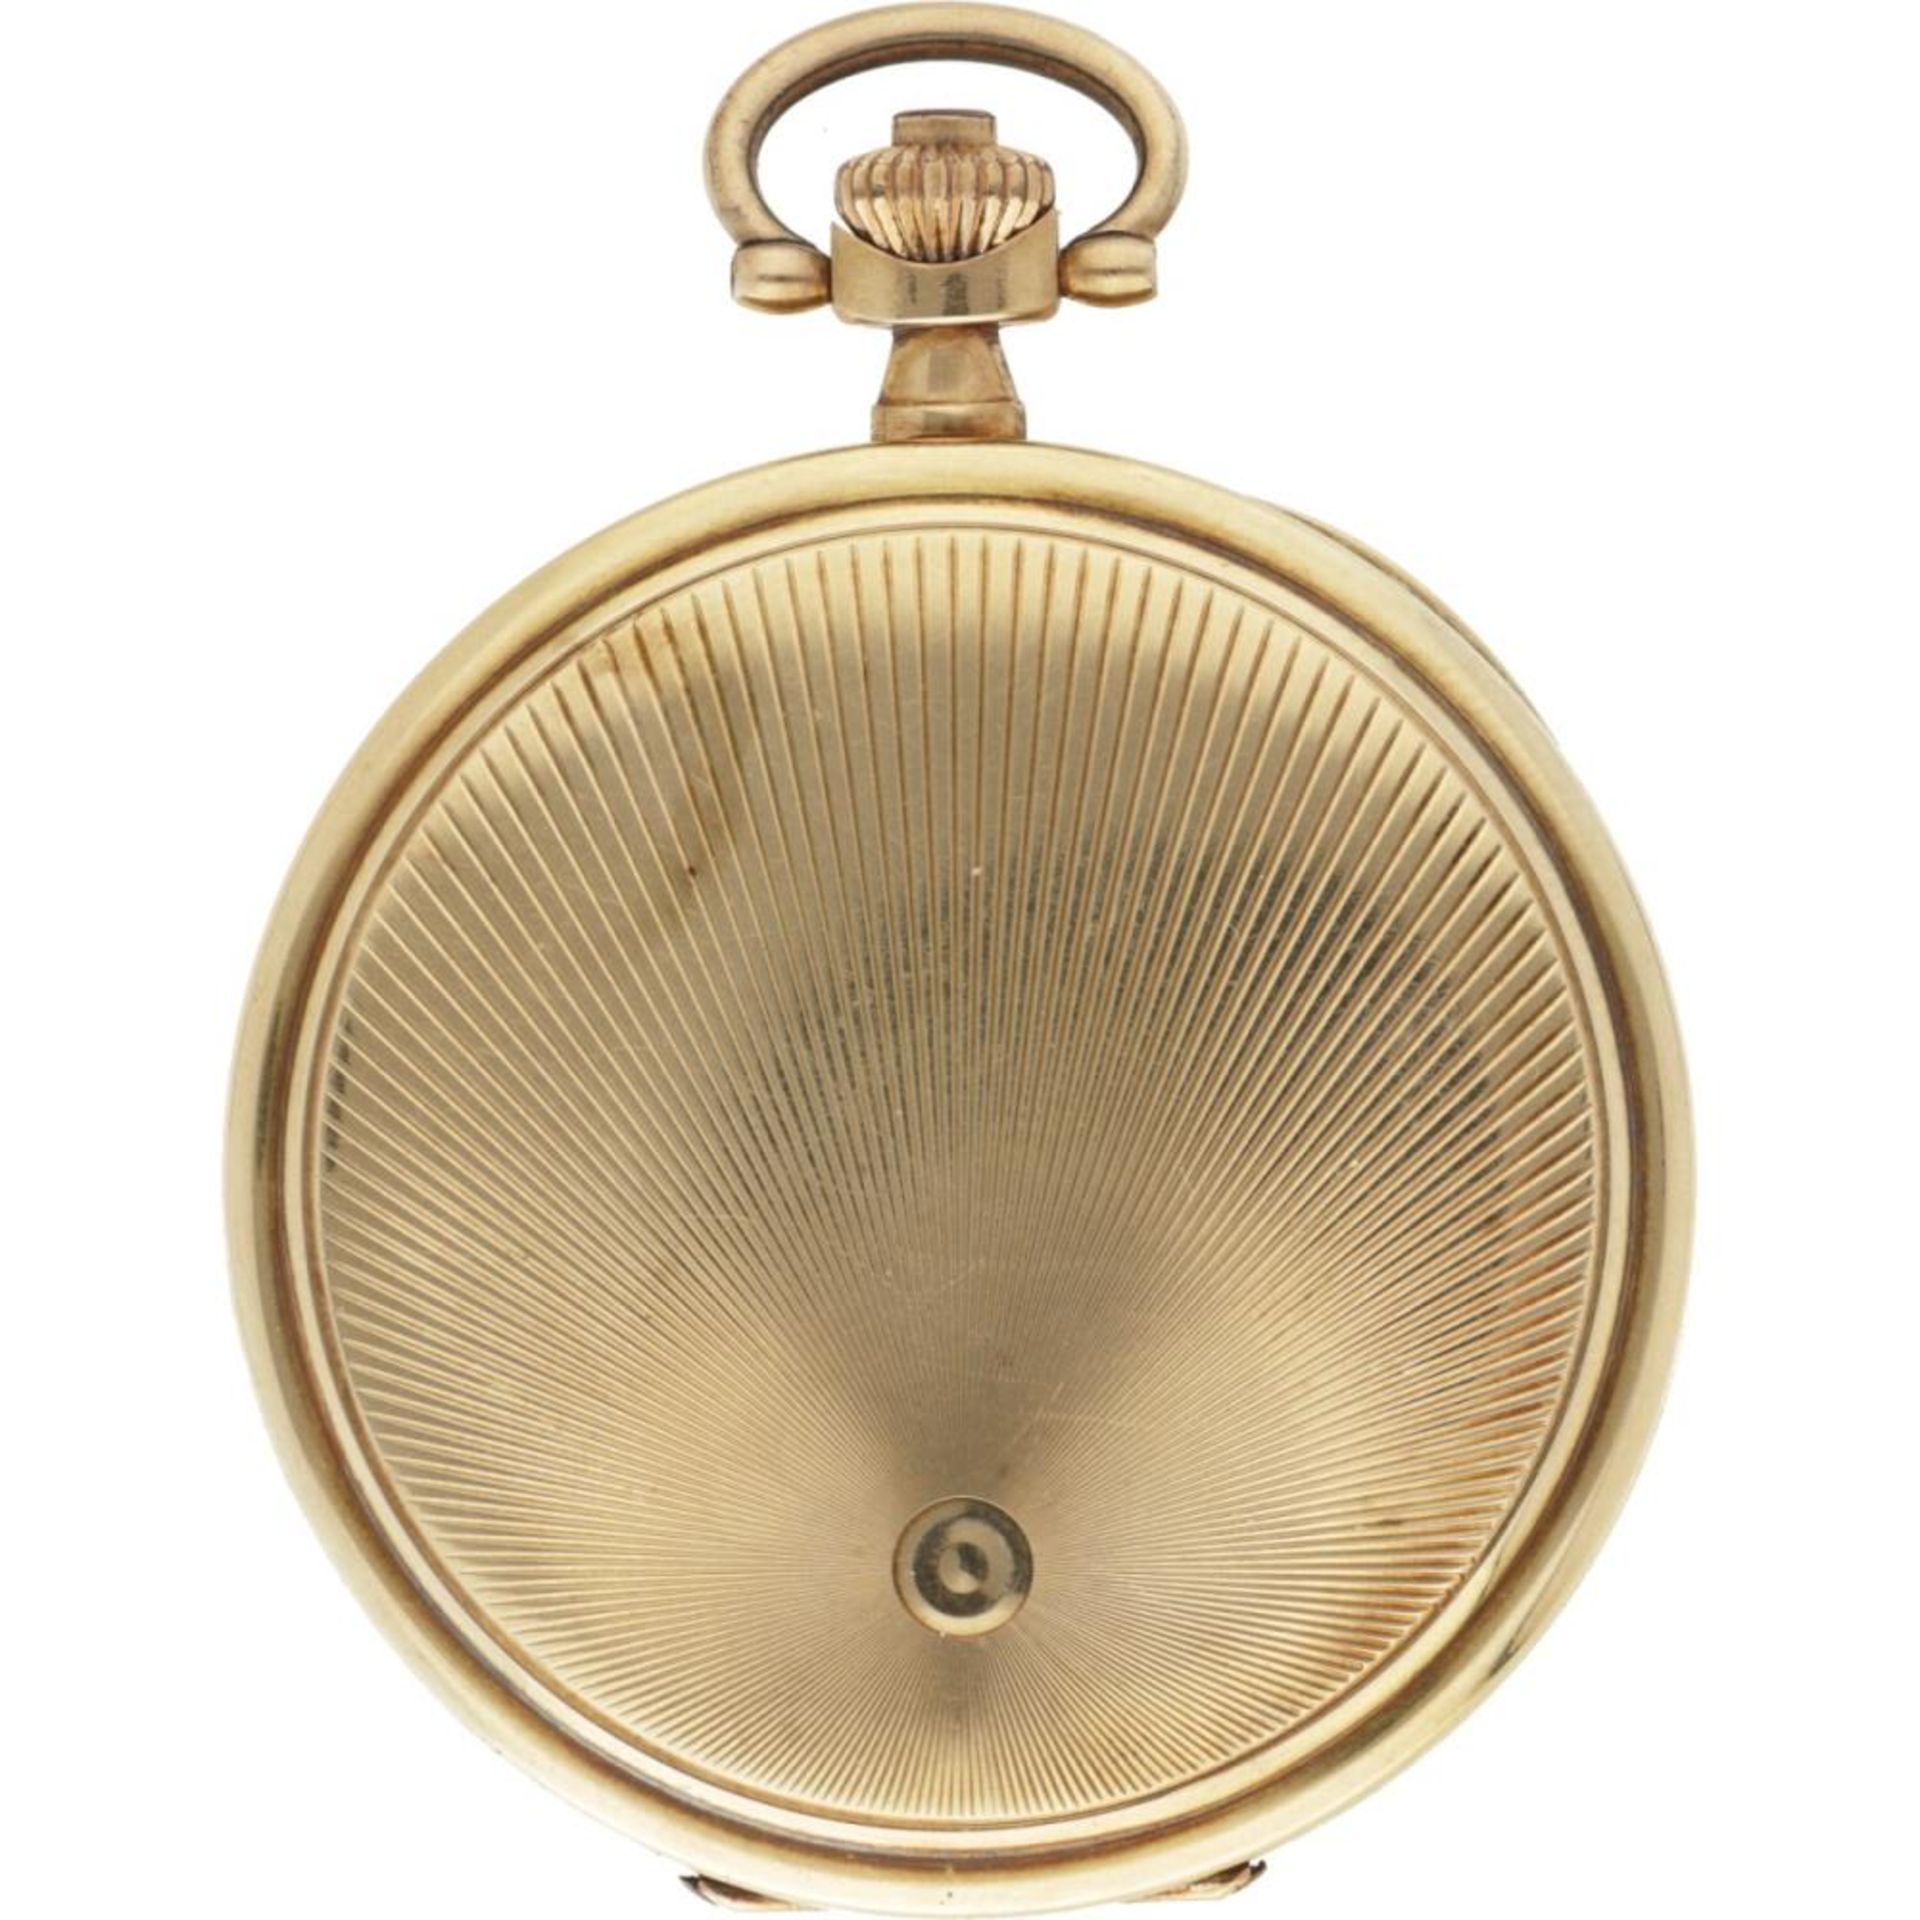 Golden Savonette lever-escapement - Men's pocket watch - approx. 1900. - Bild 3 aus 8